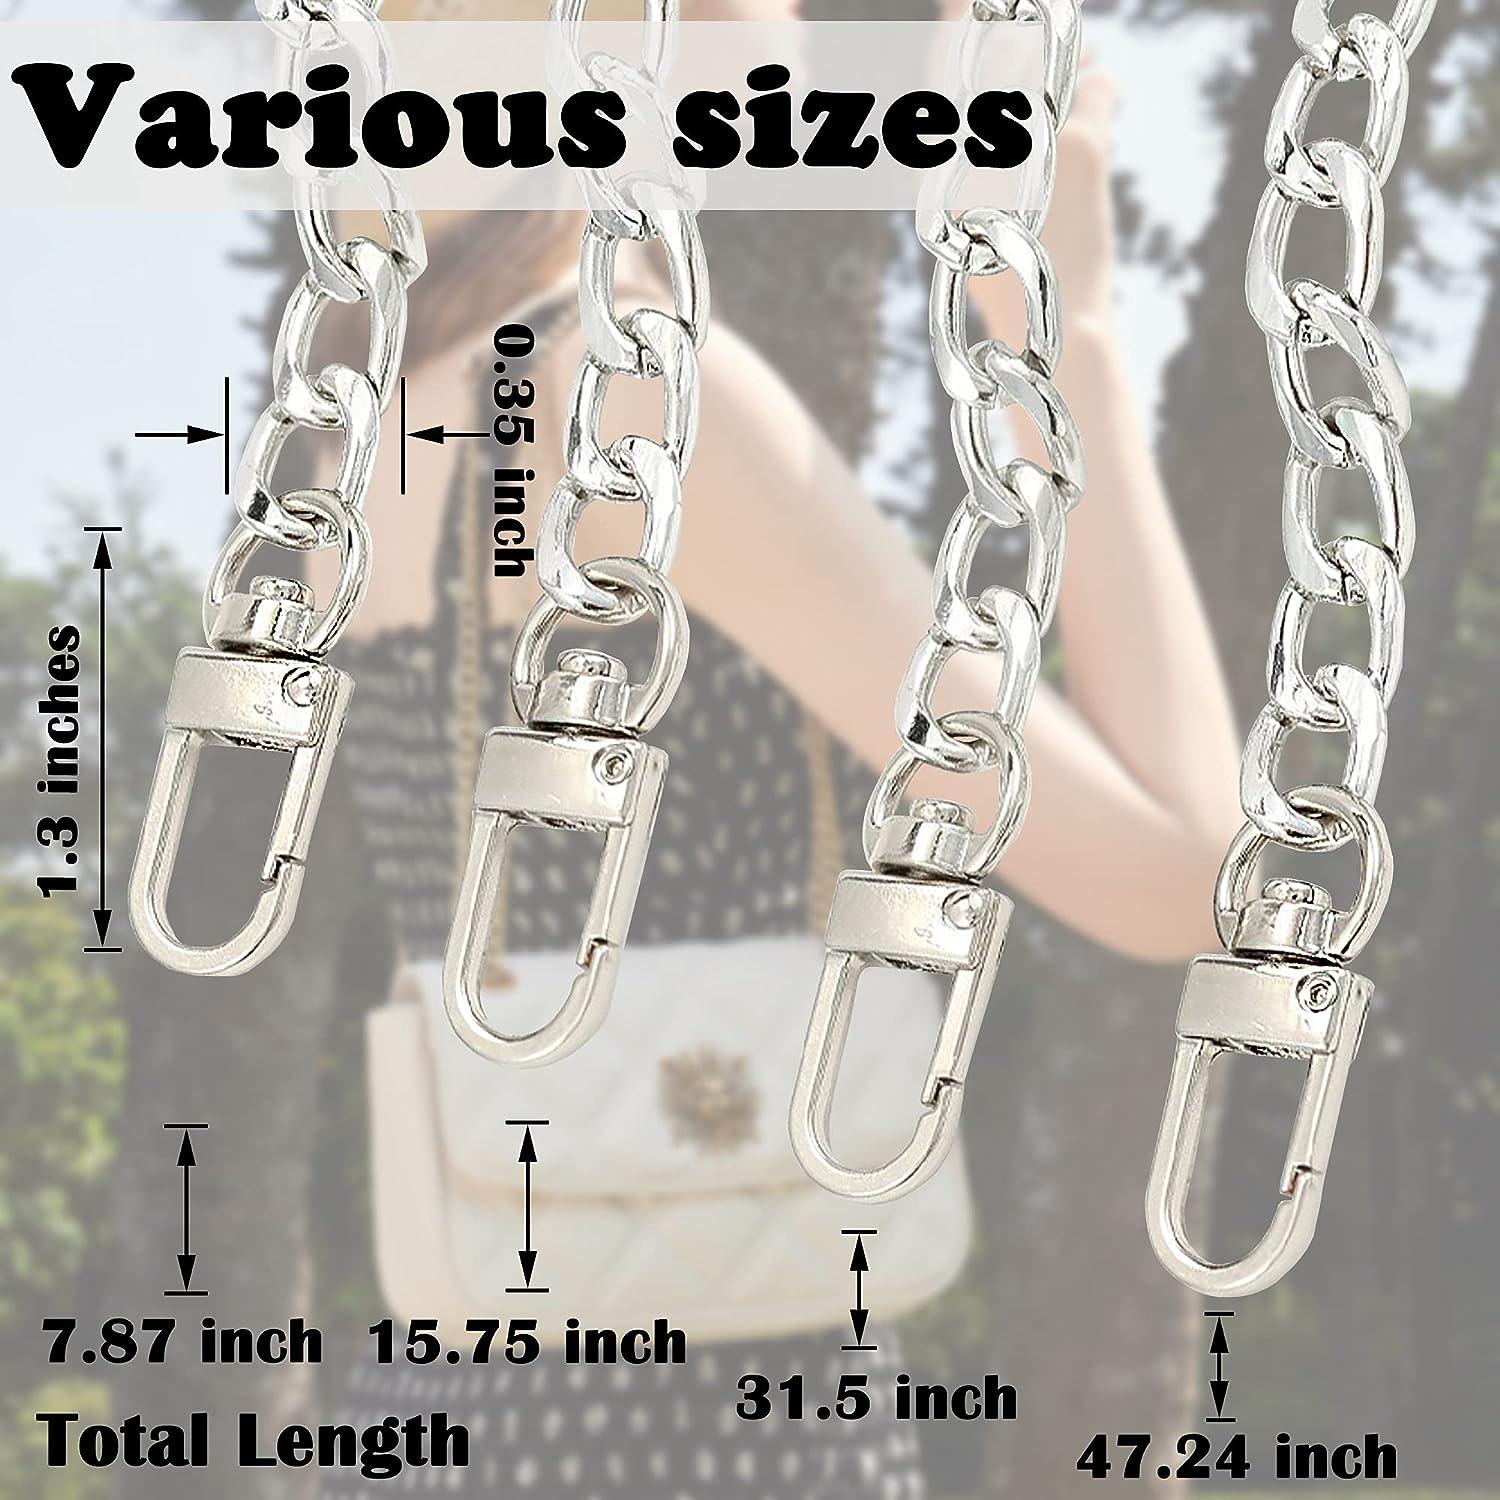 Chain shoulder strap silver